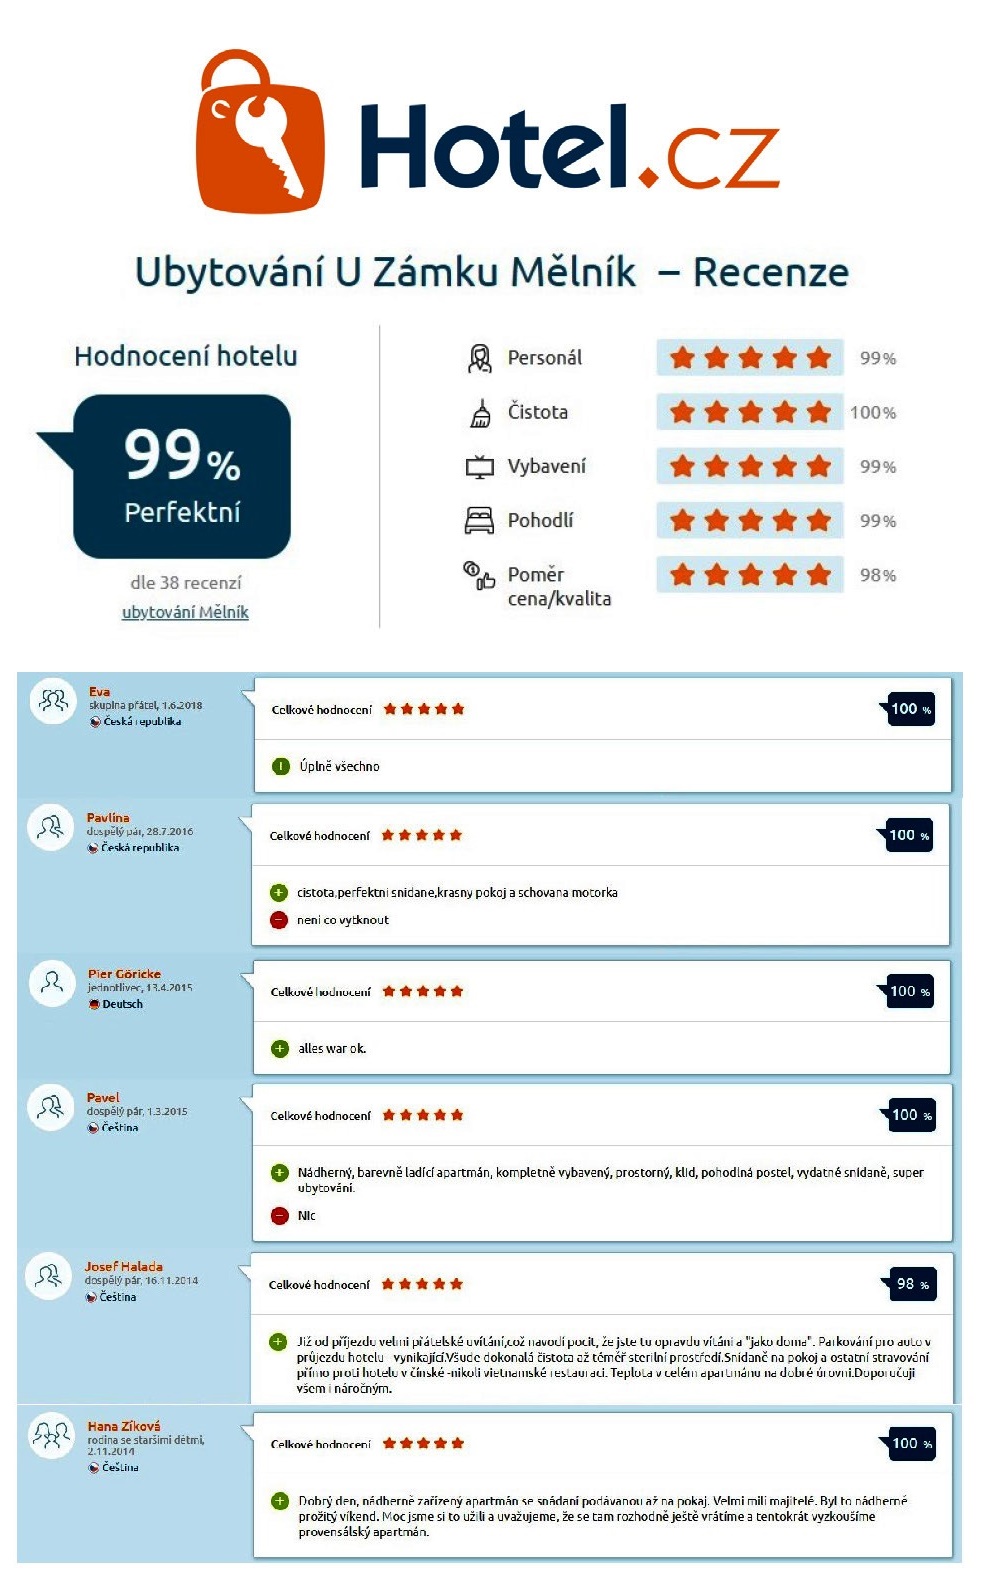 Evaluation on hotel.cz